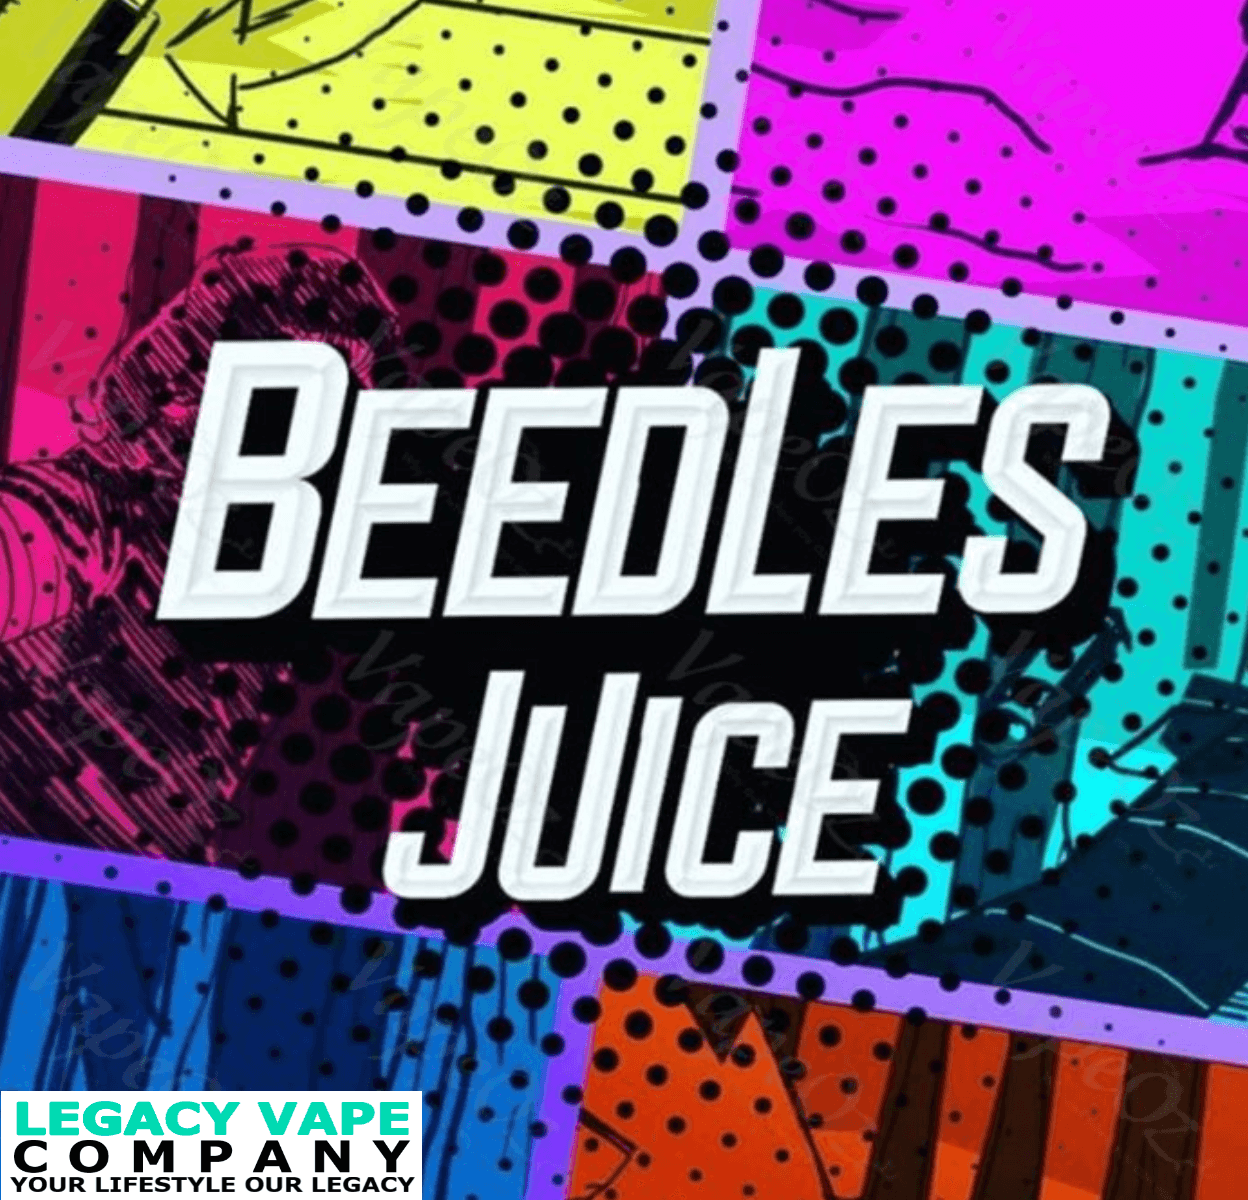 Beedles Juice 120ml Vape juice Australia